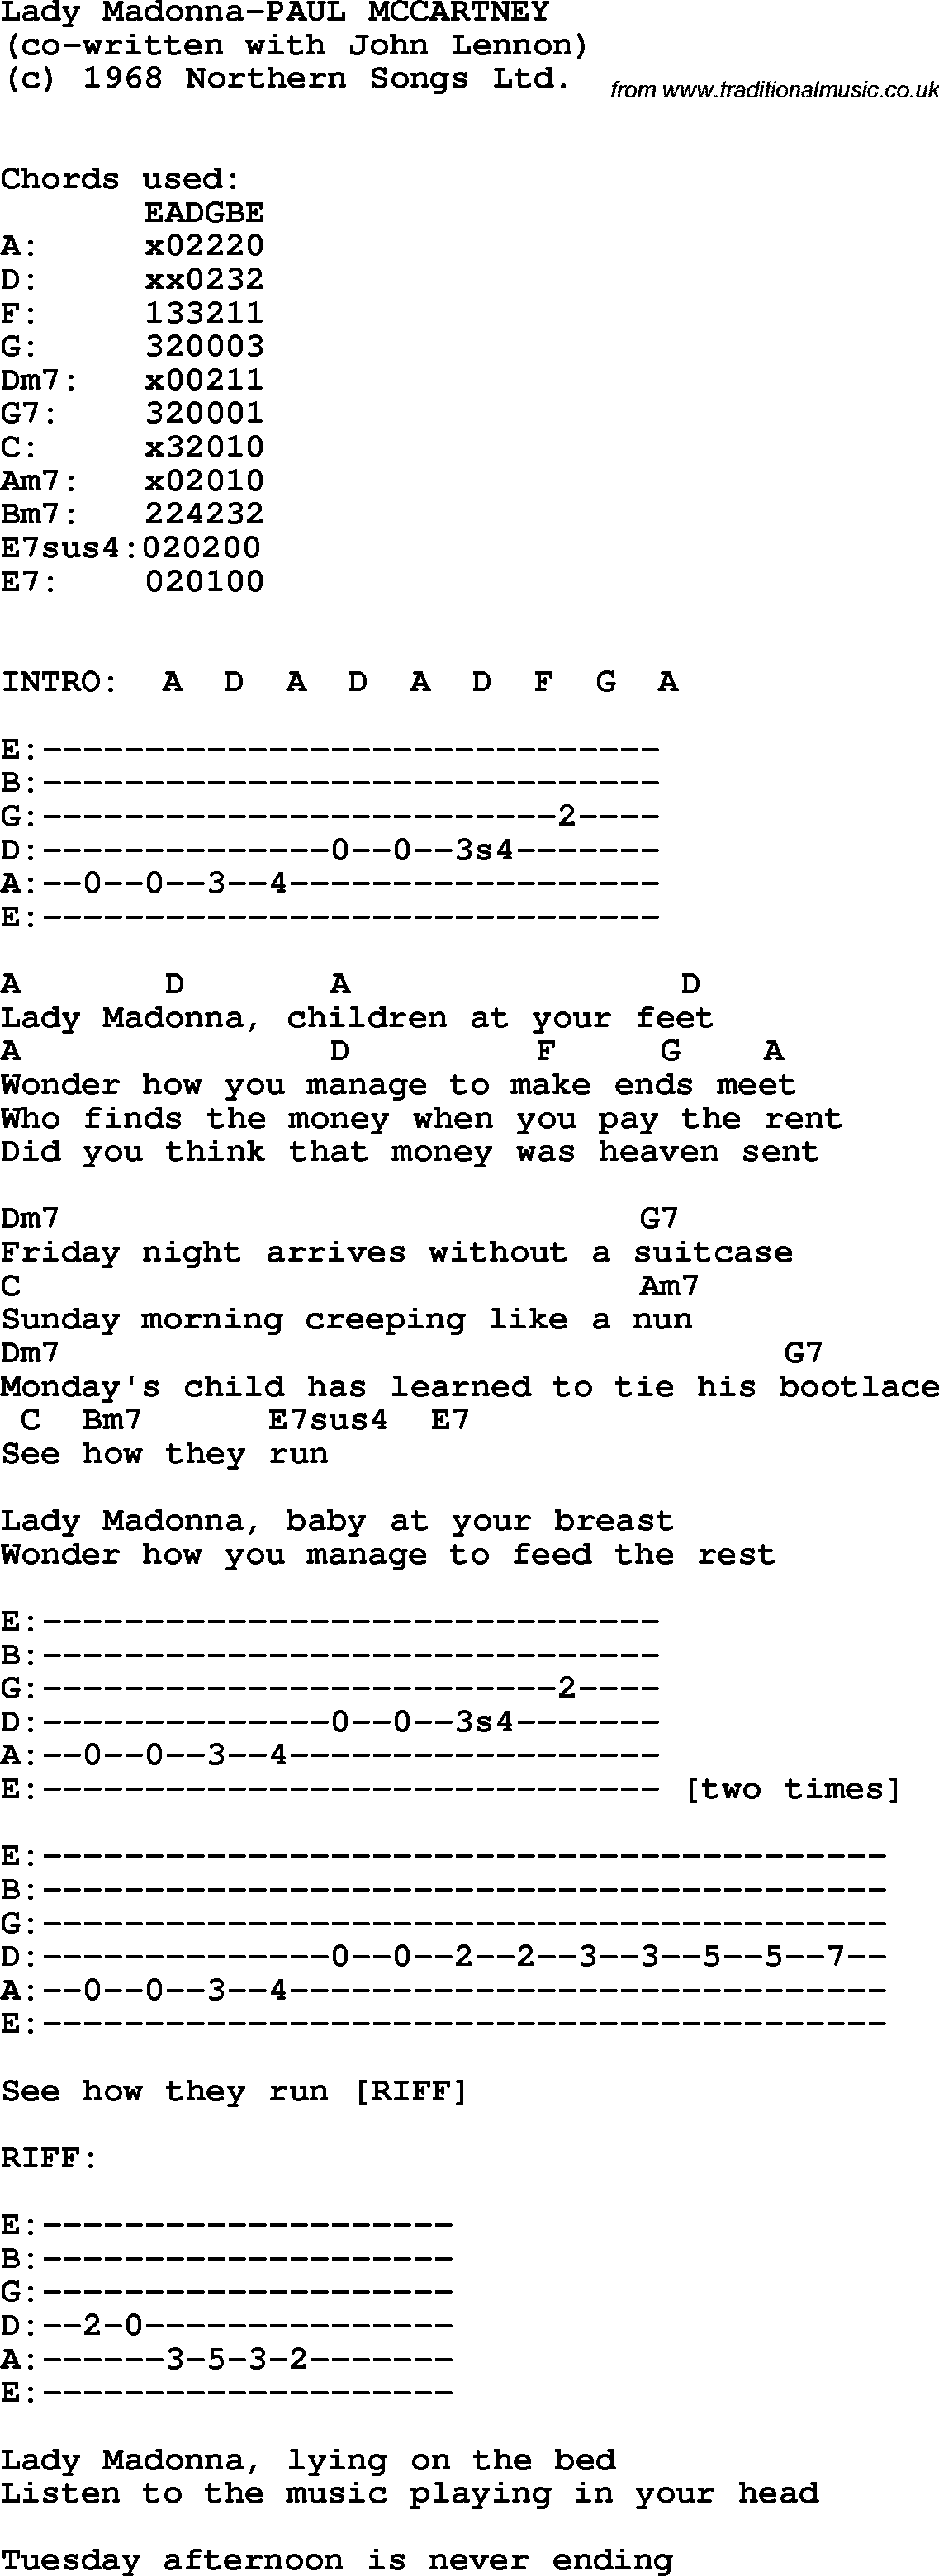 Protest Song Lady Madonna-Paul McCartney lyrics and chords